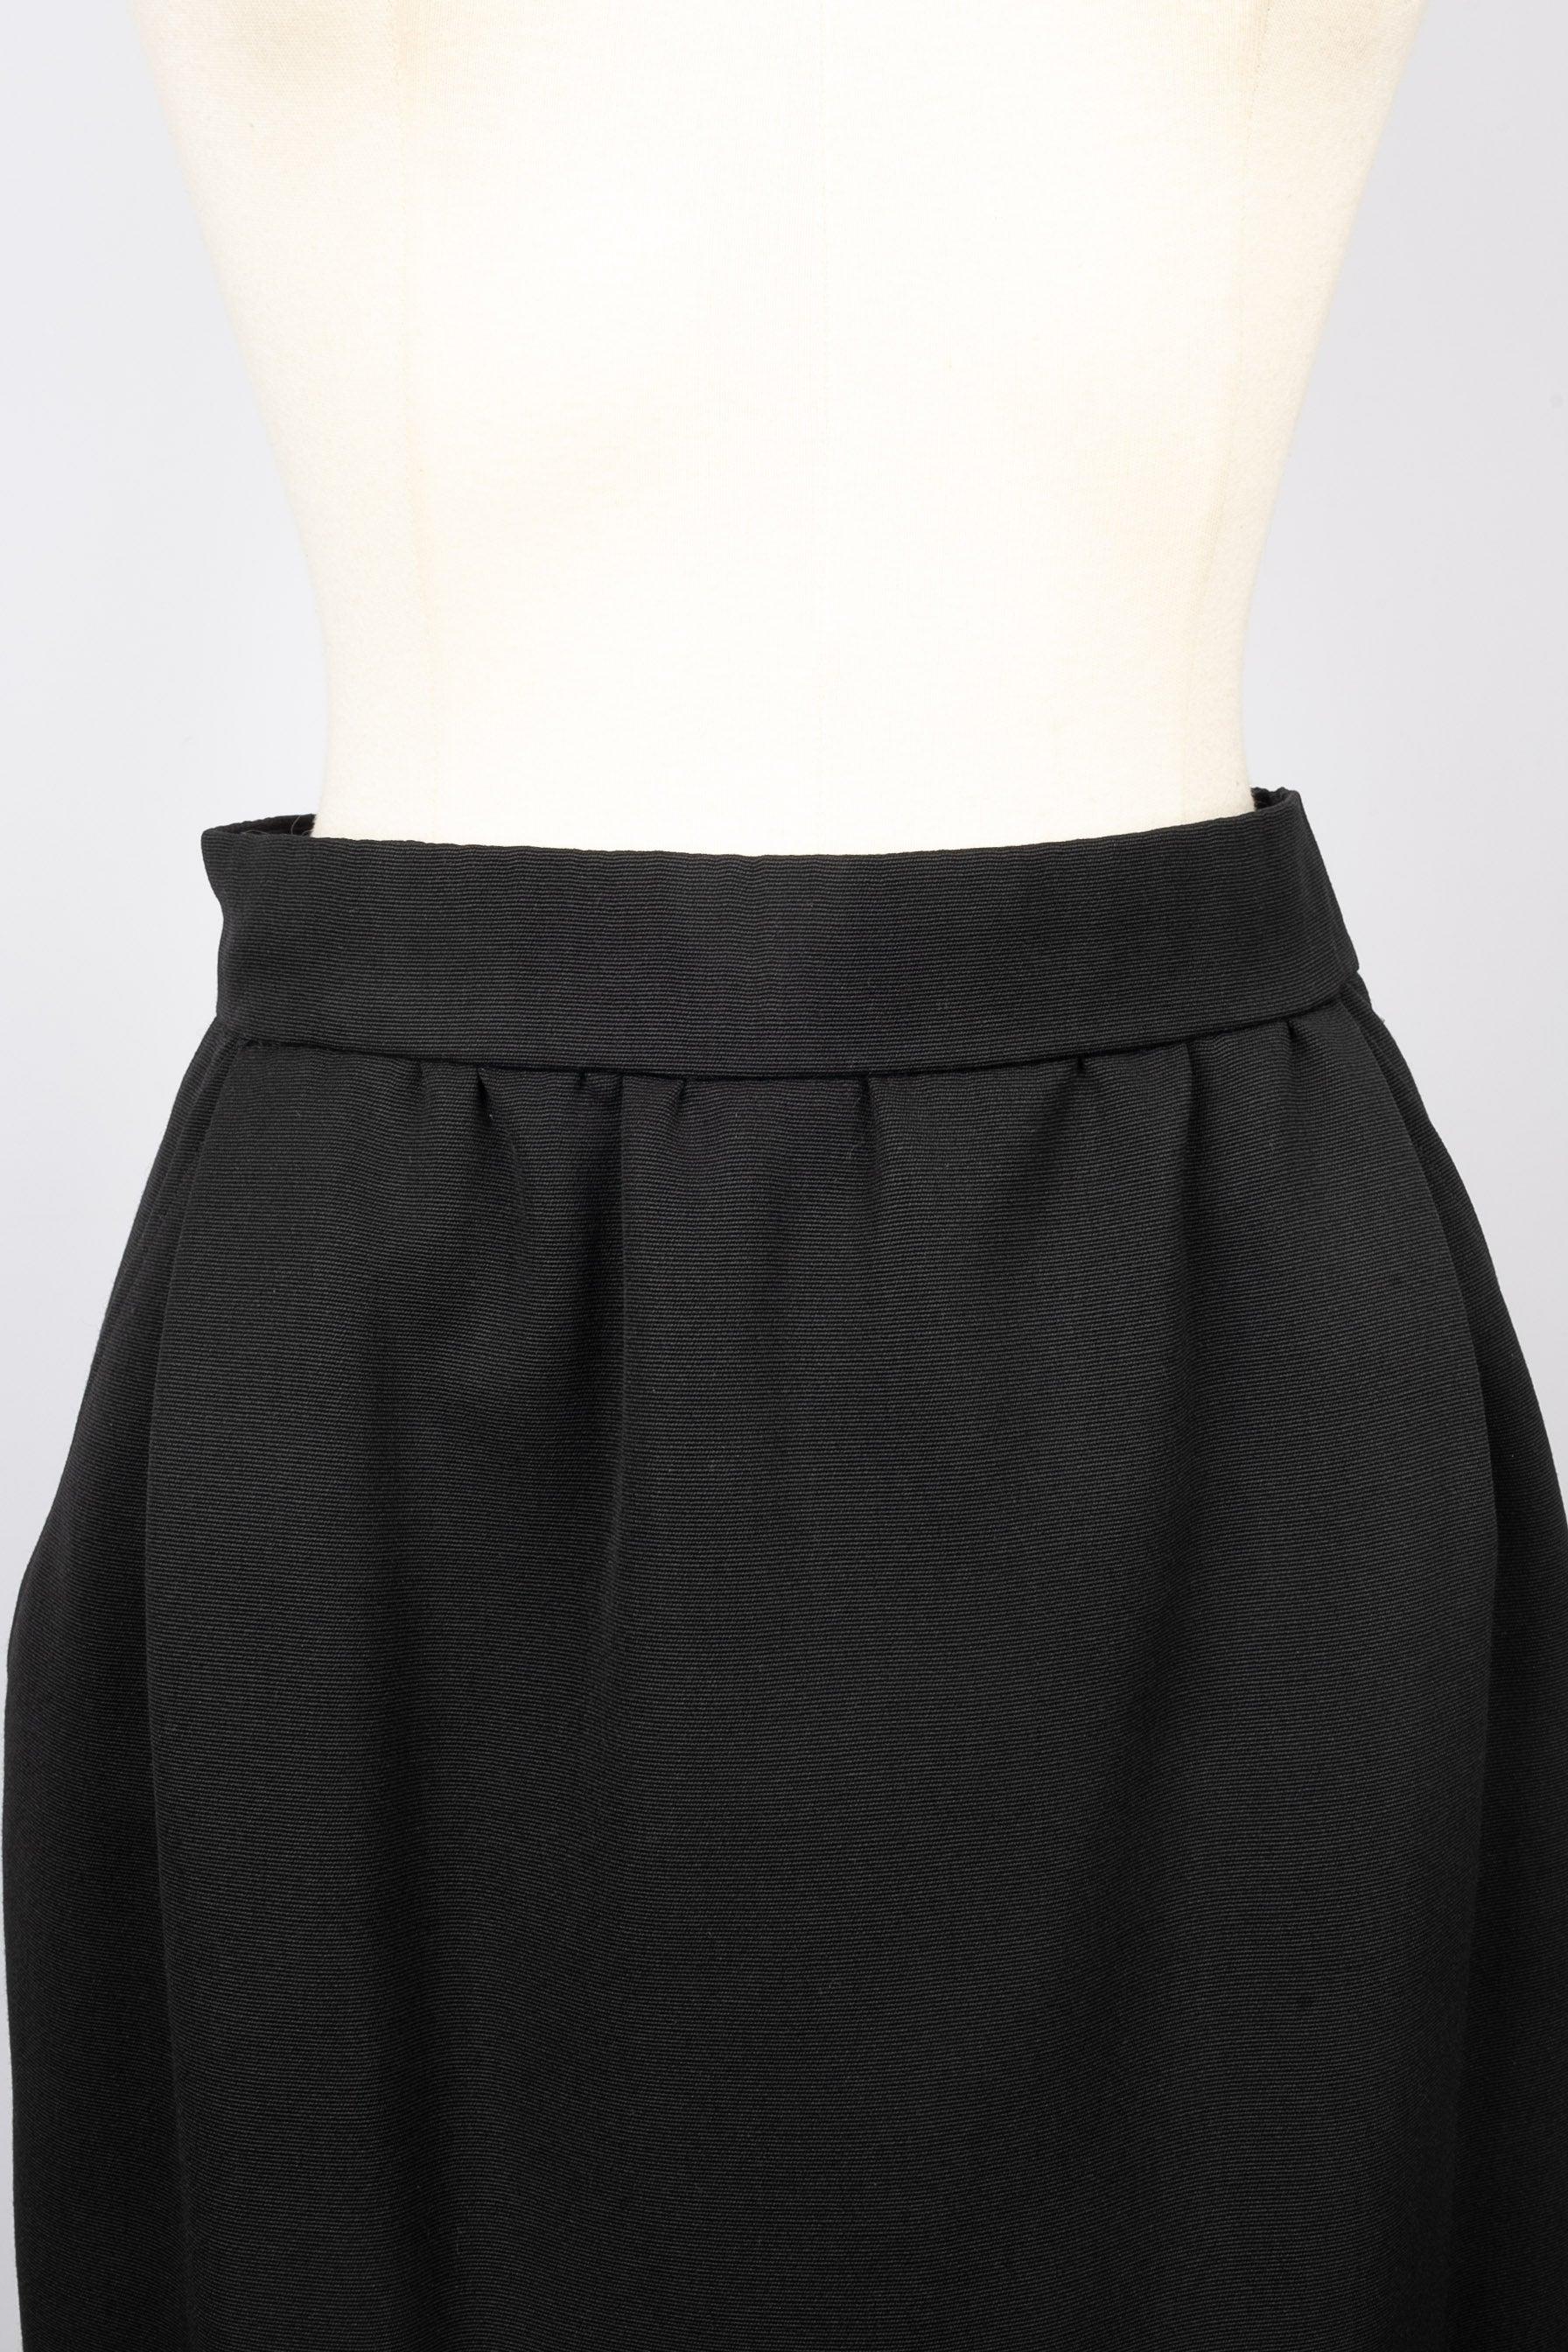 Yves Saint Laurent Black Skirt Suit Enlivened with Satin Belt Haute Couture 3